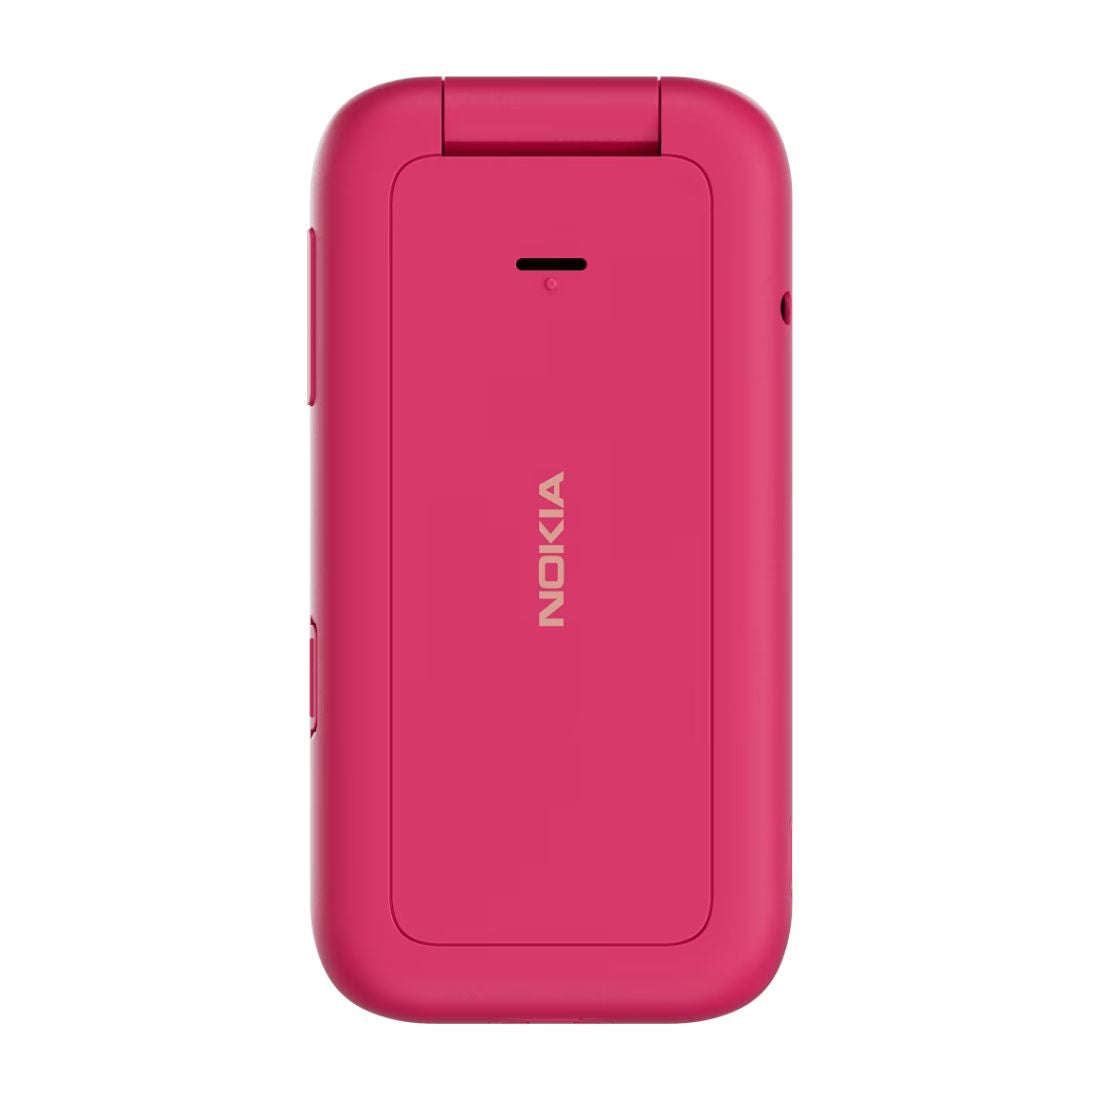 Nokia 2660 Dual SIM 4G FLIP BIG Button Phone Unlocked - Pink